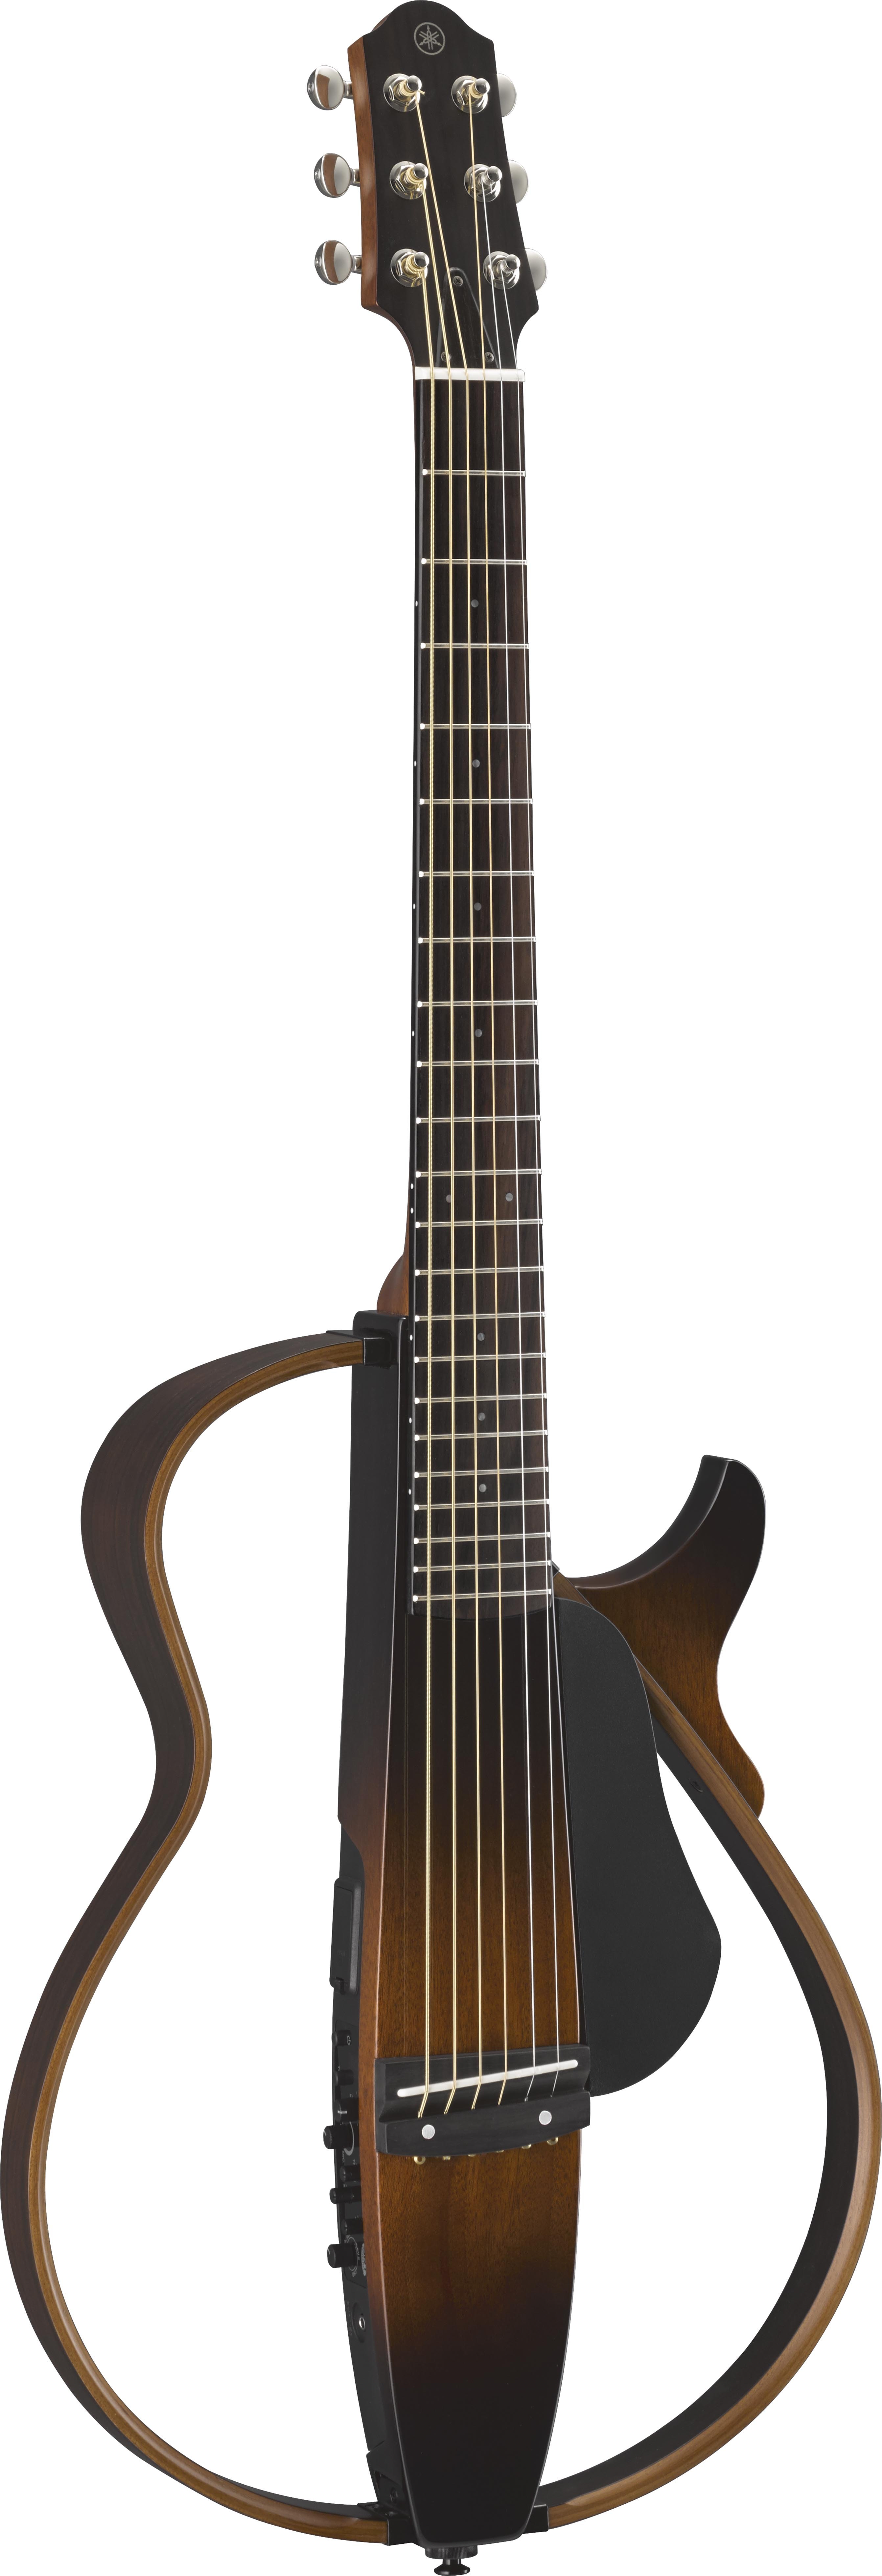 SLG200 Series - サイレントギター™ - 開発者インタビュー - ヤマハ